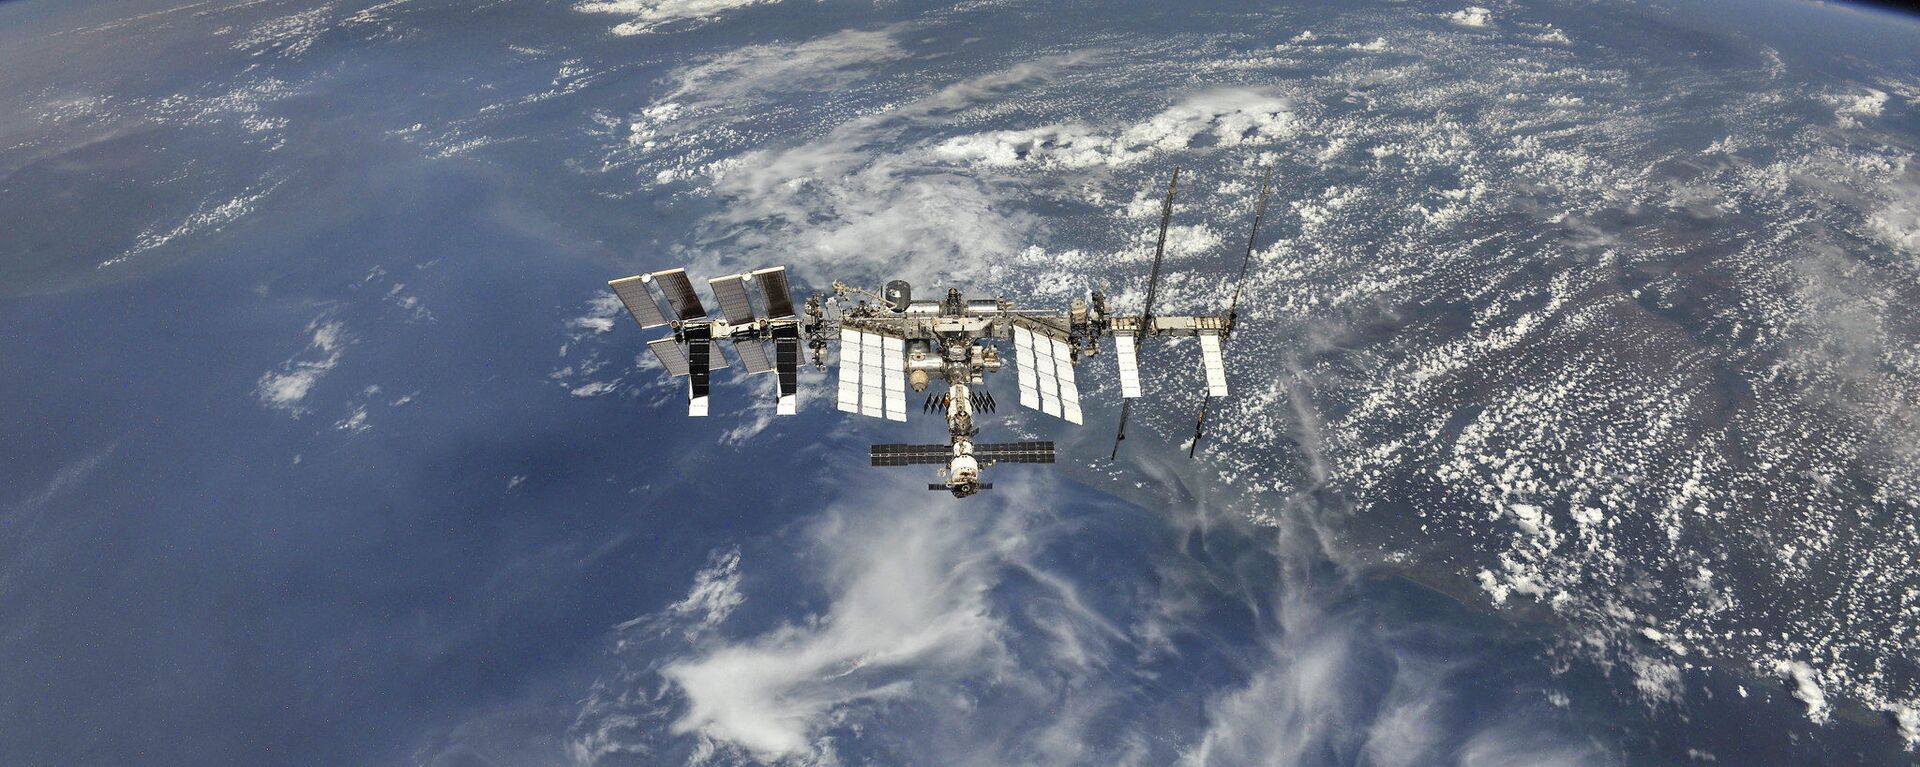 Estación Espacial Internacional (EEI) - Sputnik Mundo, 1920, 29.09.2020